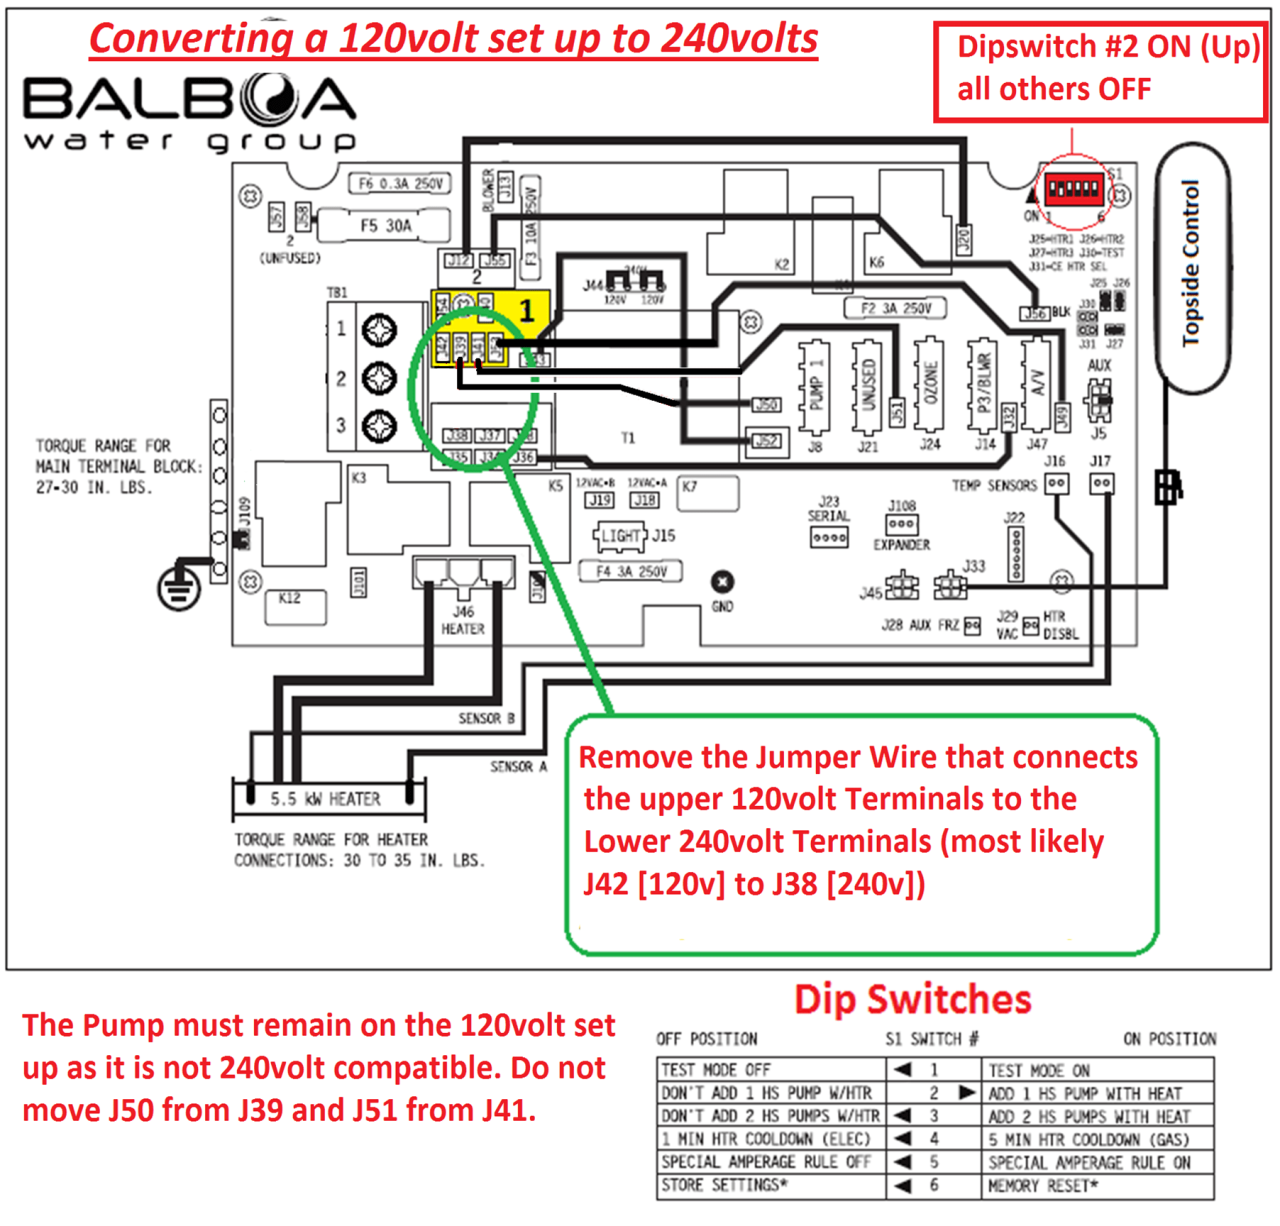 Electrical Installation Converting a 120V Balboa BP to 240V